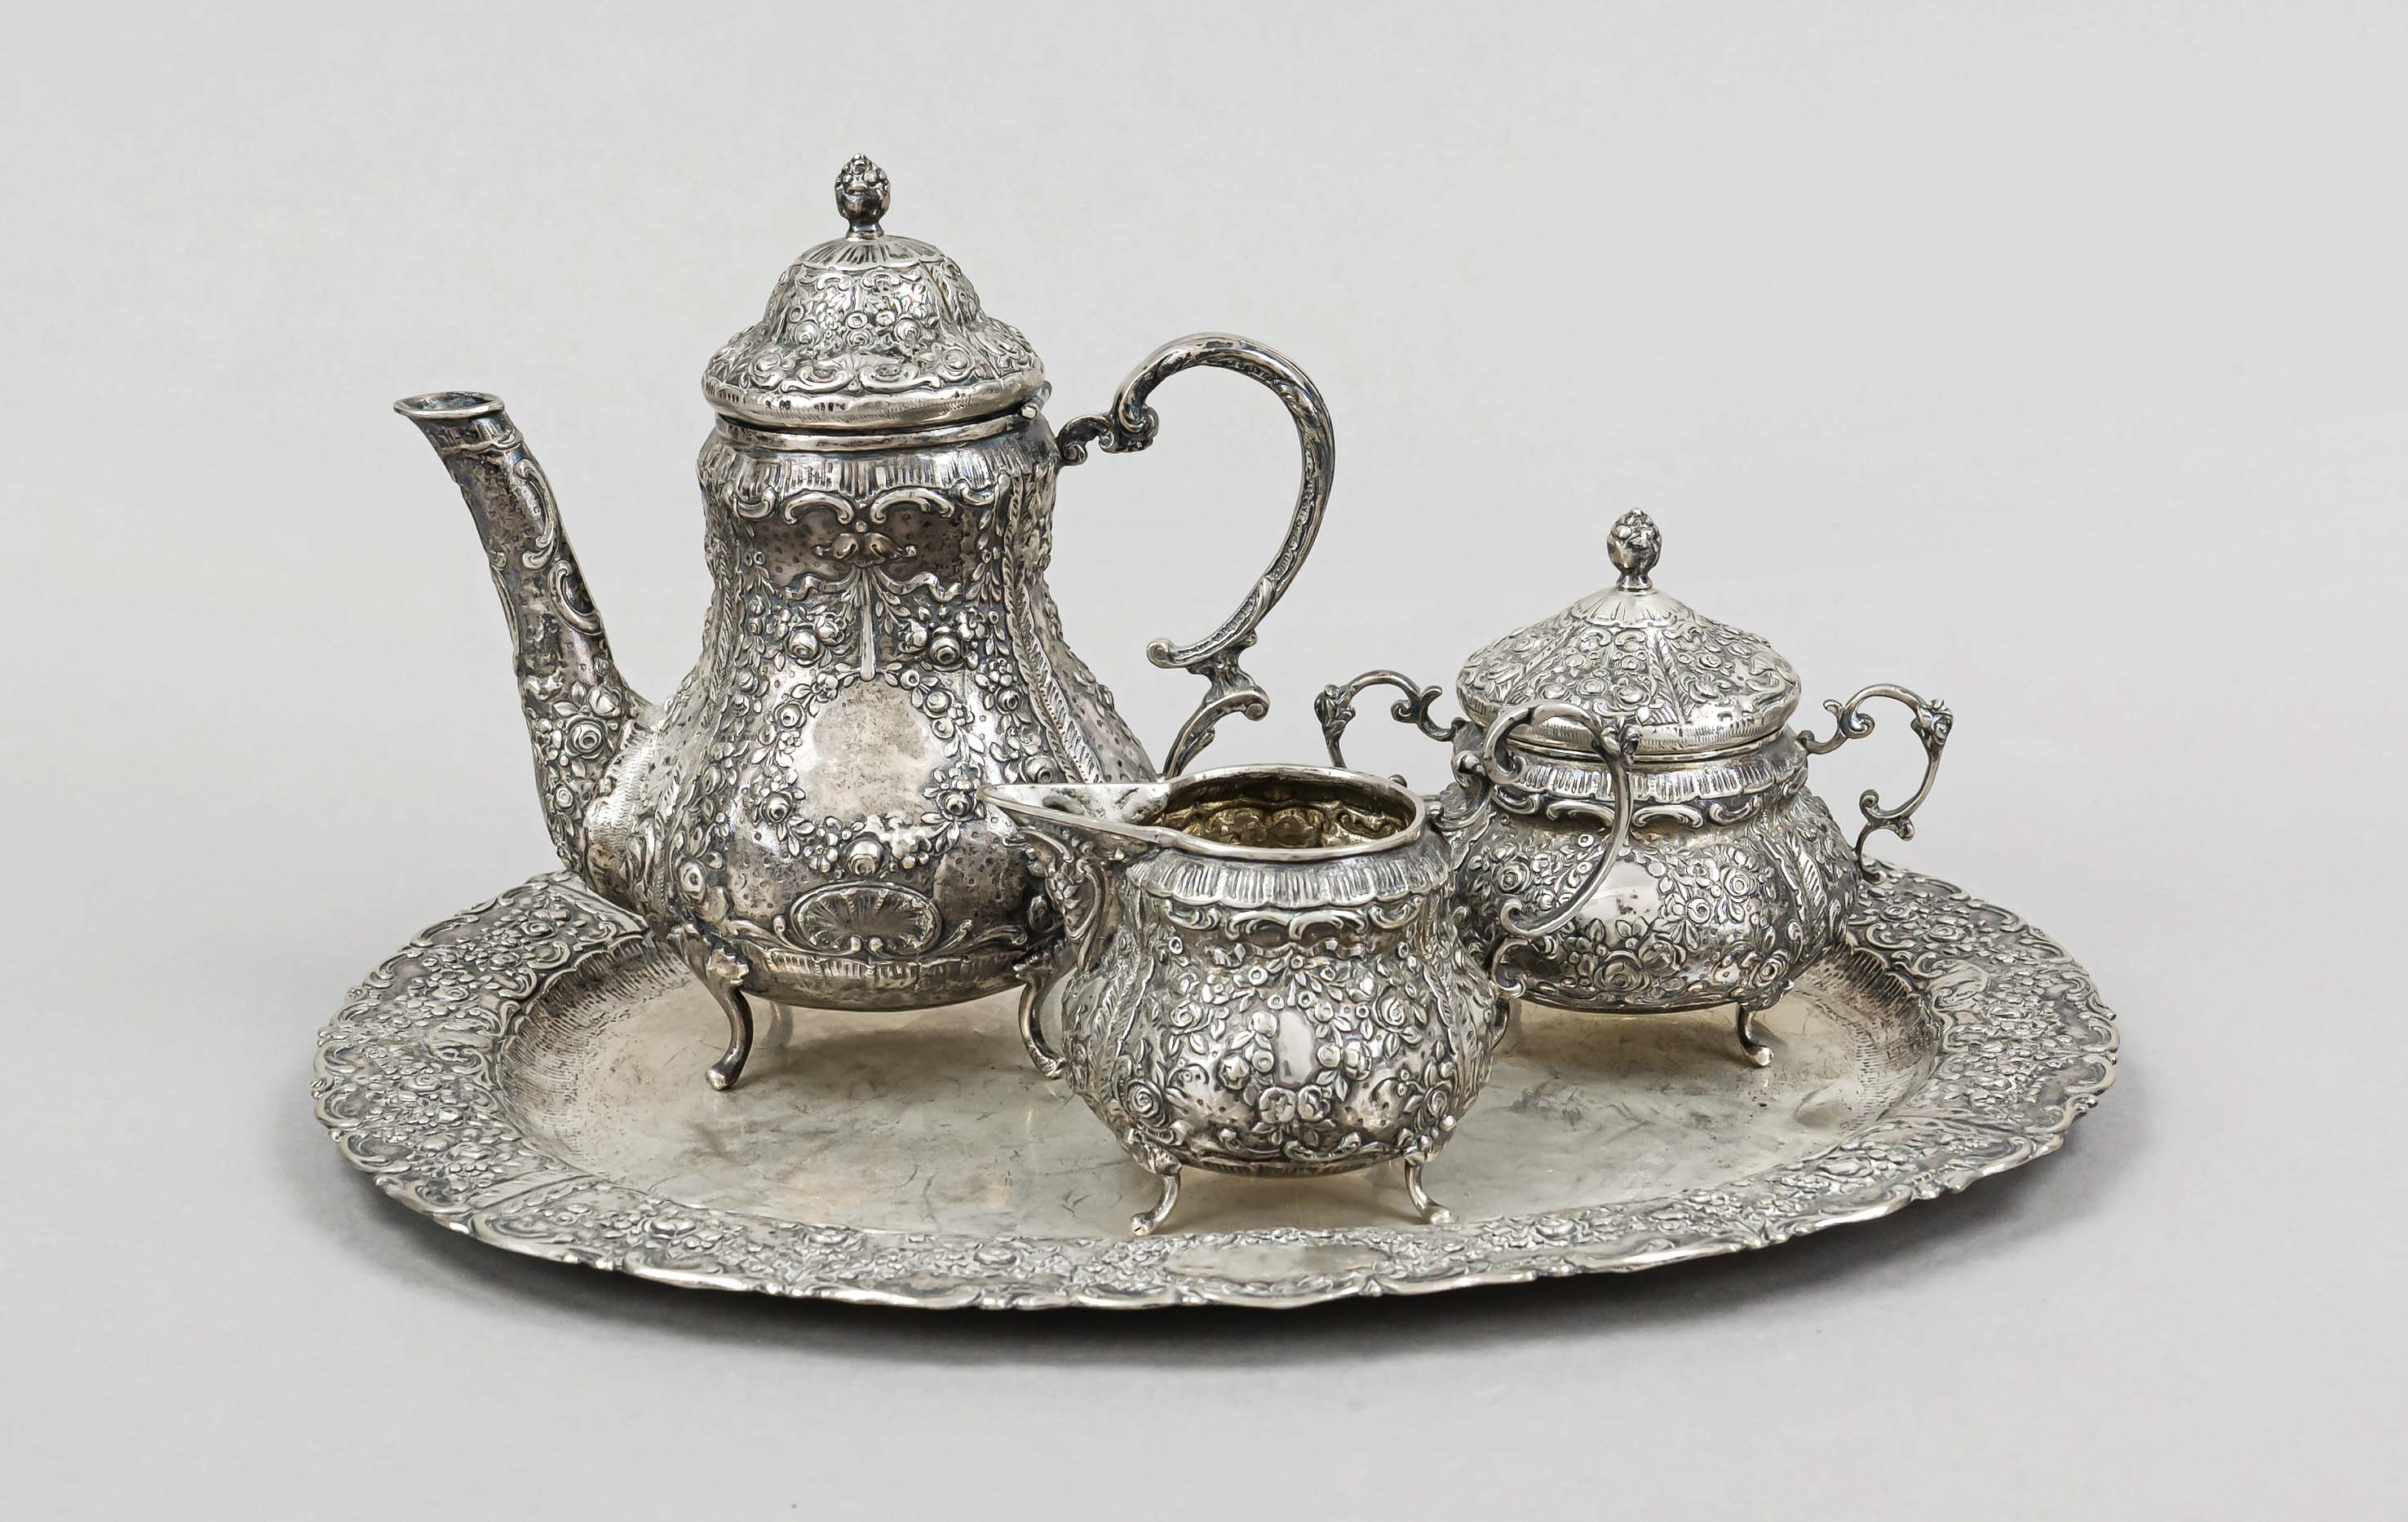 A three-piece mocha pot on an oval tray, German, 20th century, silver 800/000, partly gilt interior,